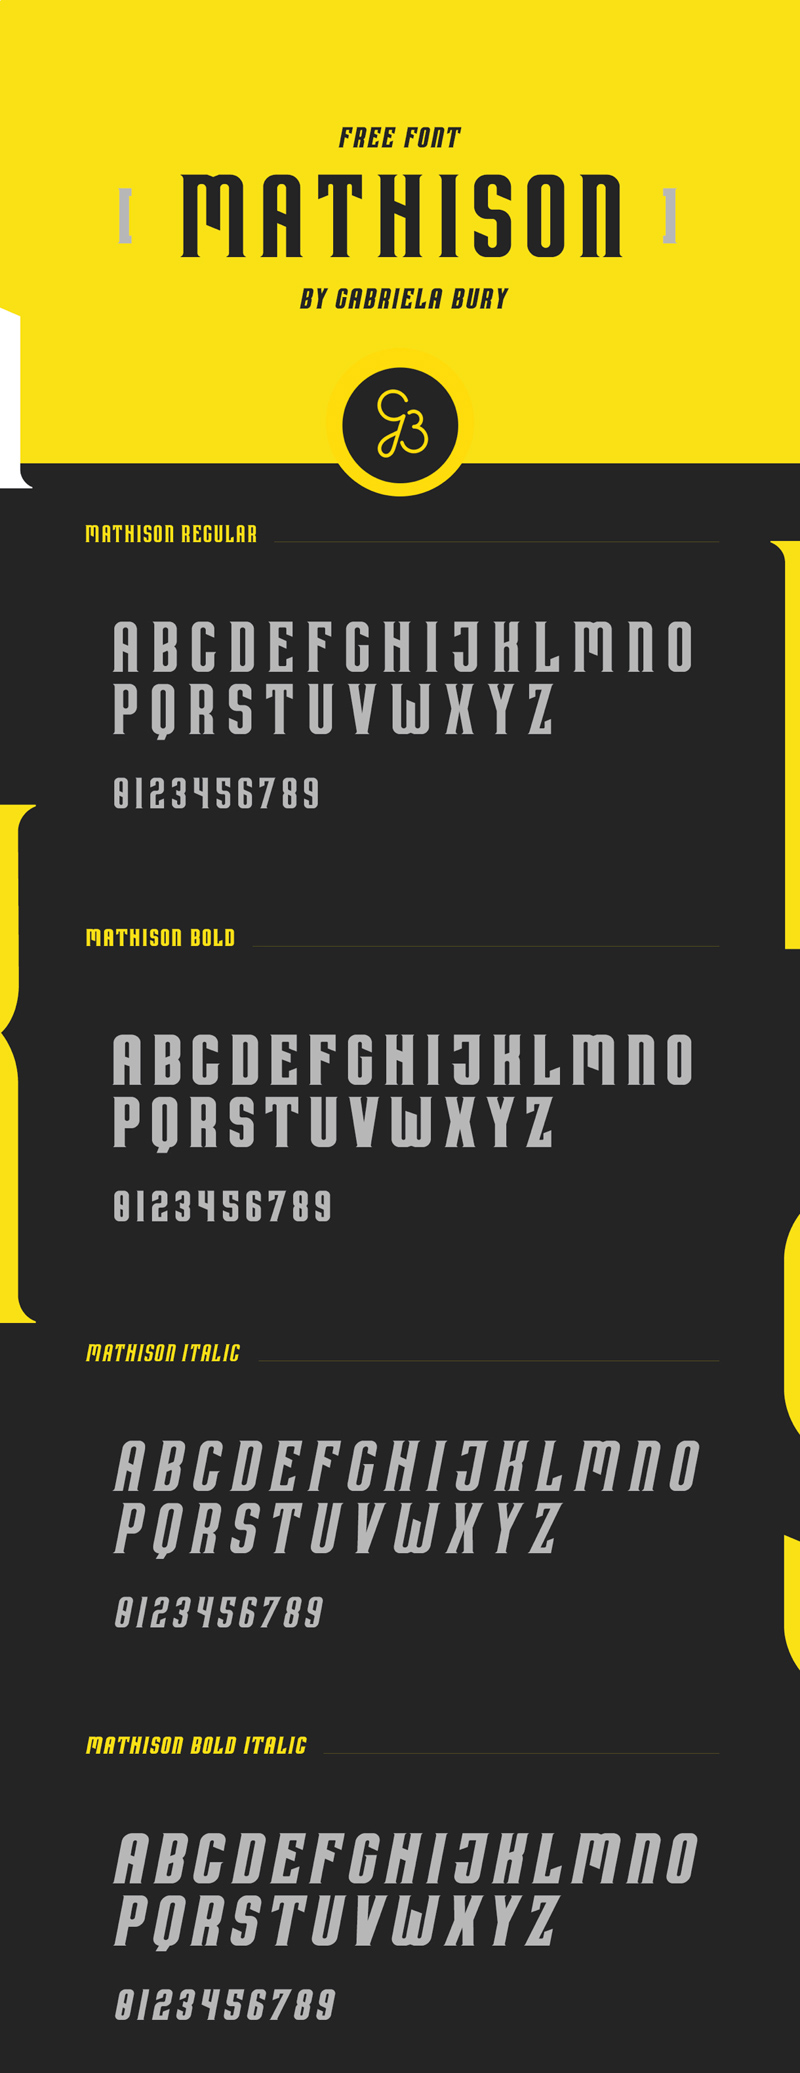 Матисон шрифт - бесплатная типография